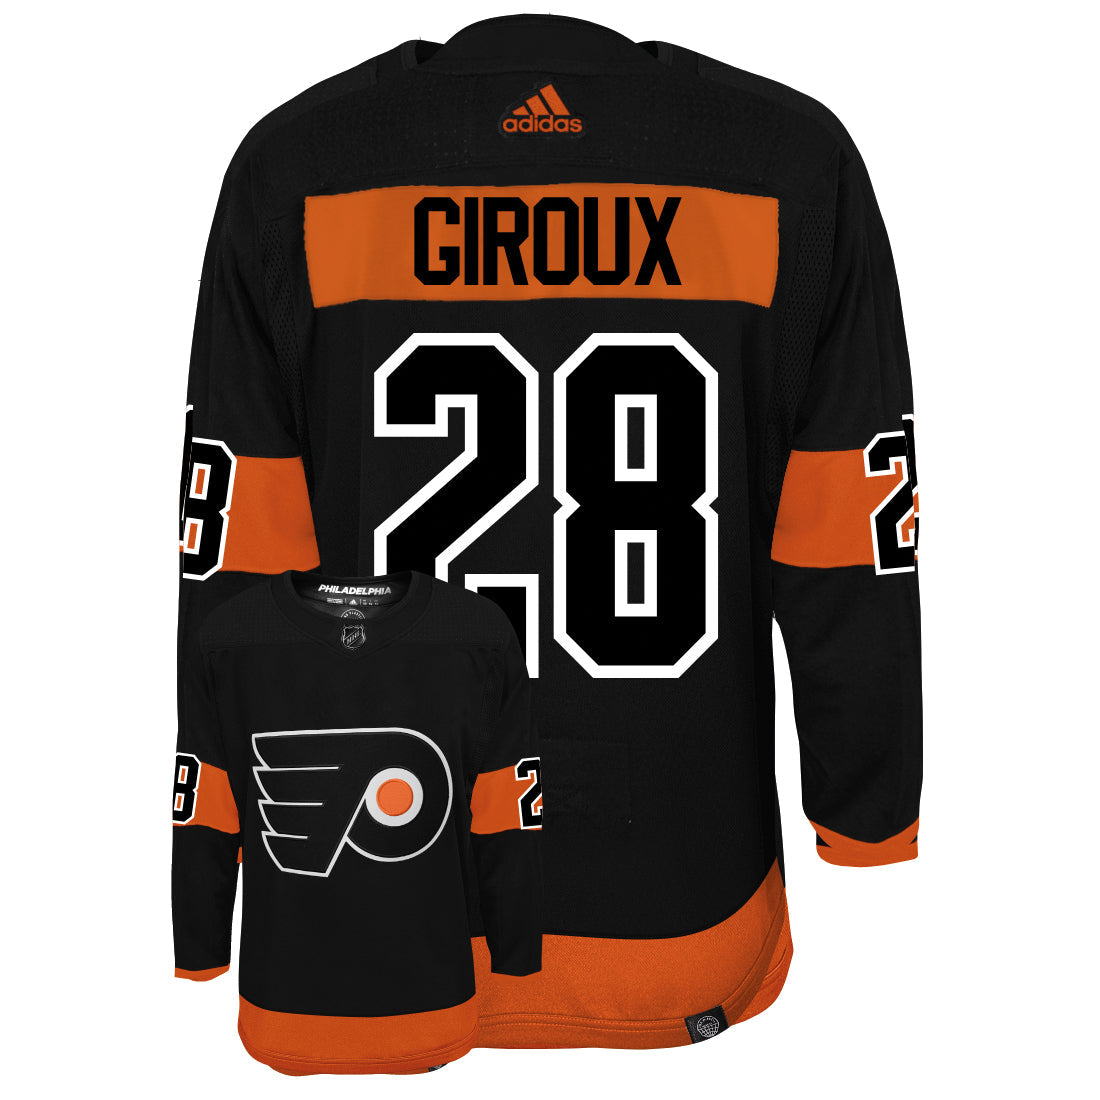 Claude Giroux Philadelphia Flyers Adidas Primegreen Authentic NHL Hockey Jersey